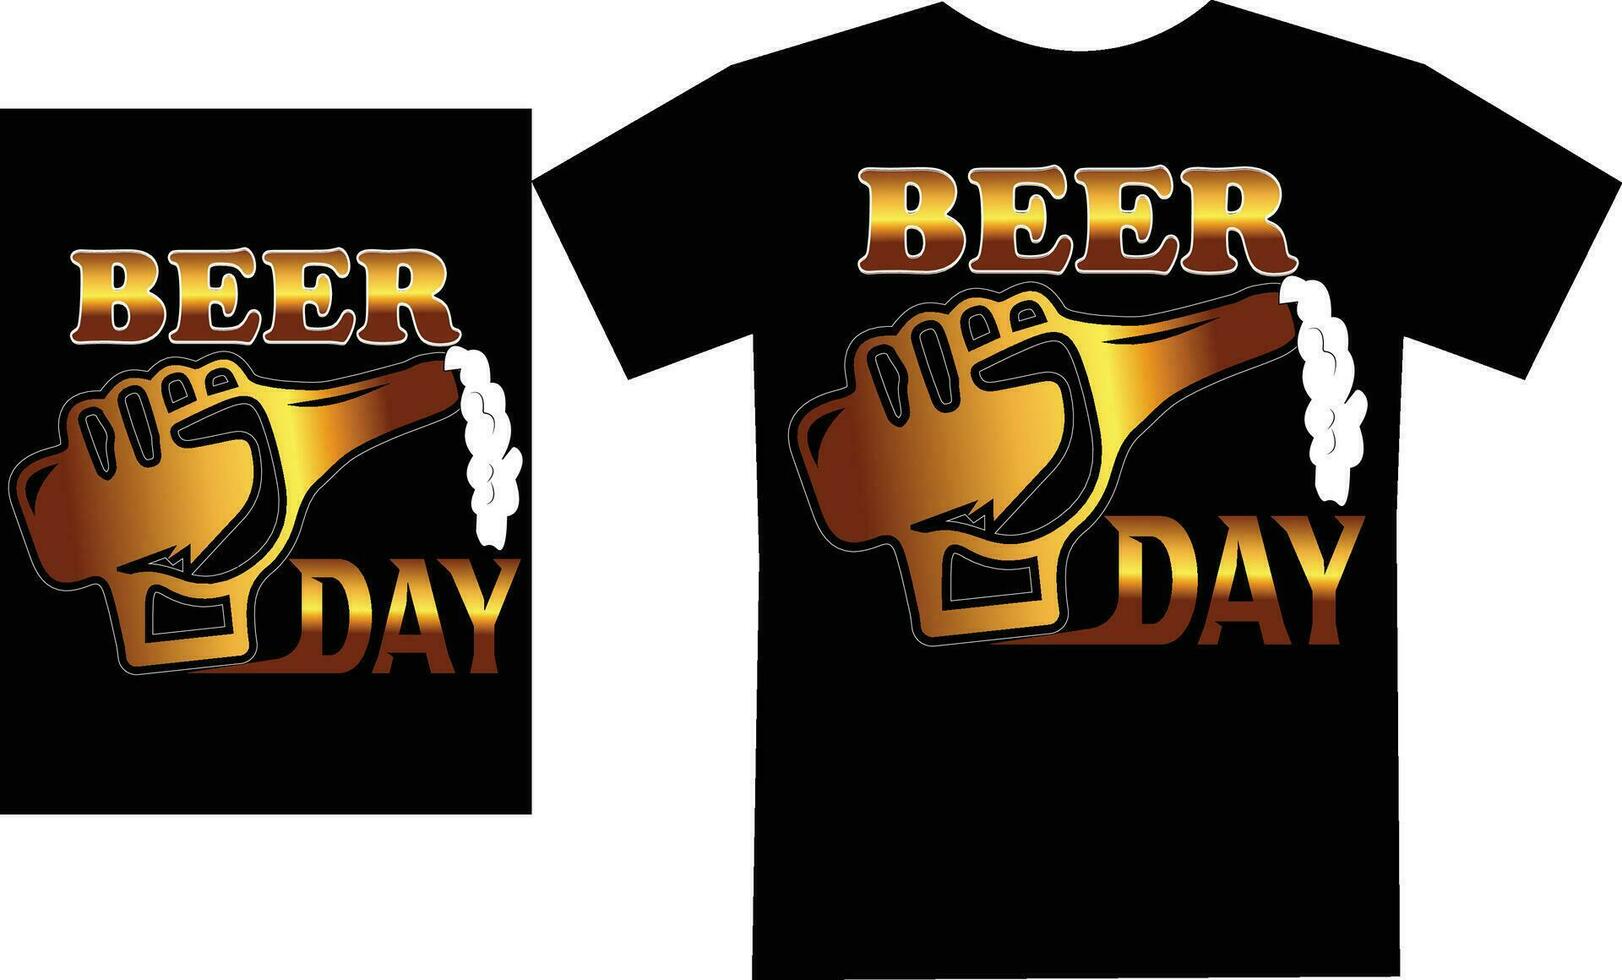 International Beer Day T- Shirt design vector file.